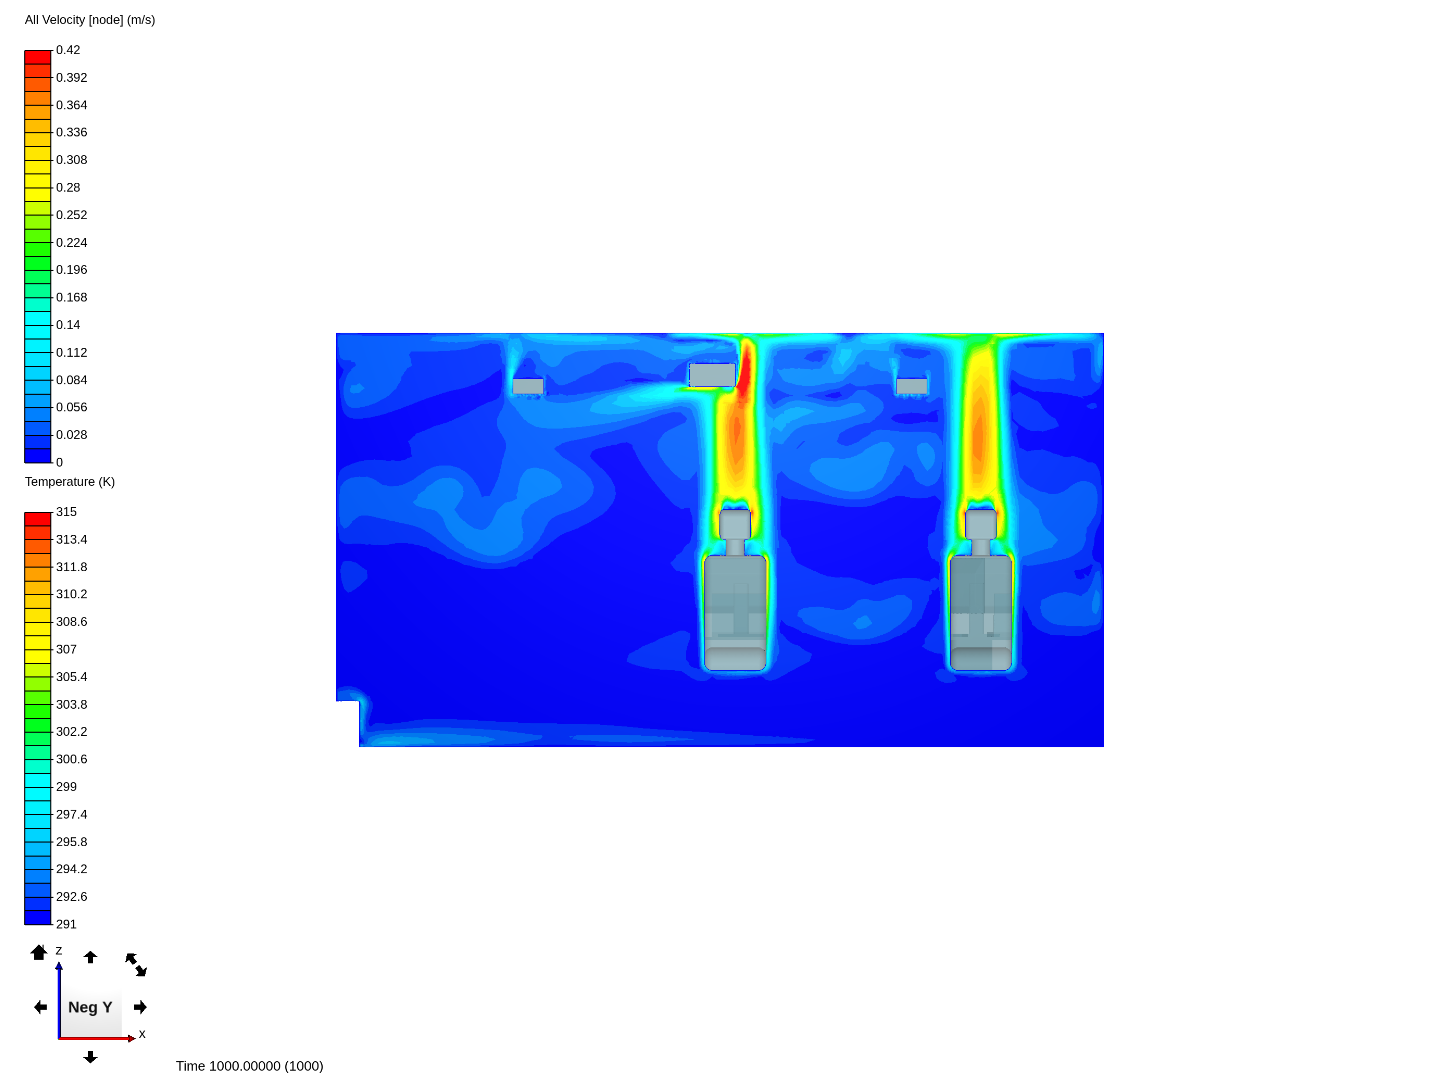 cfd analysis of thermal comfort image